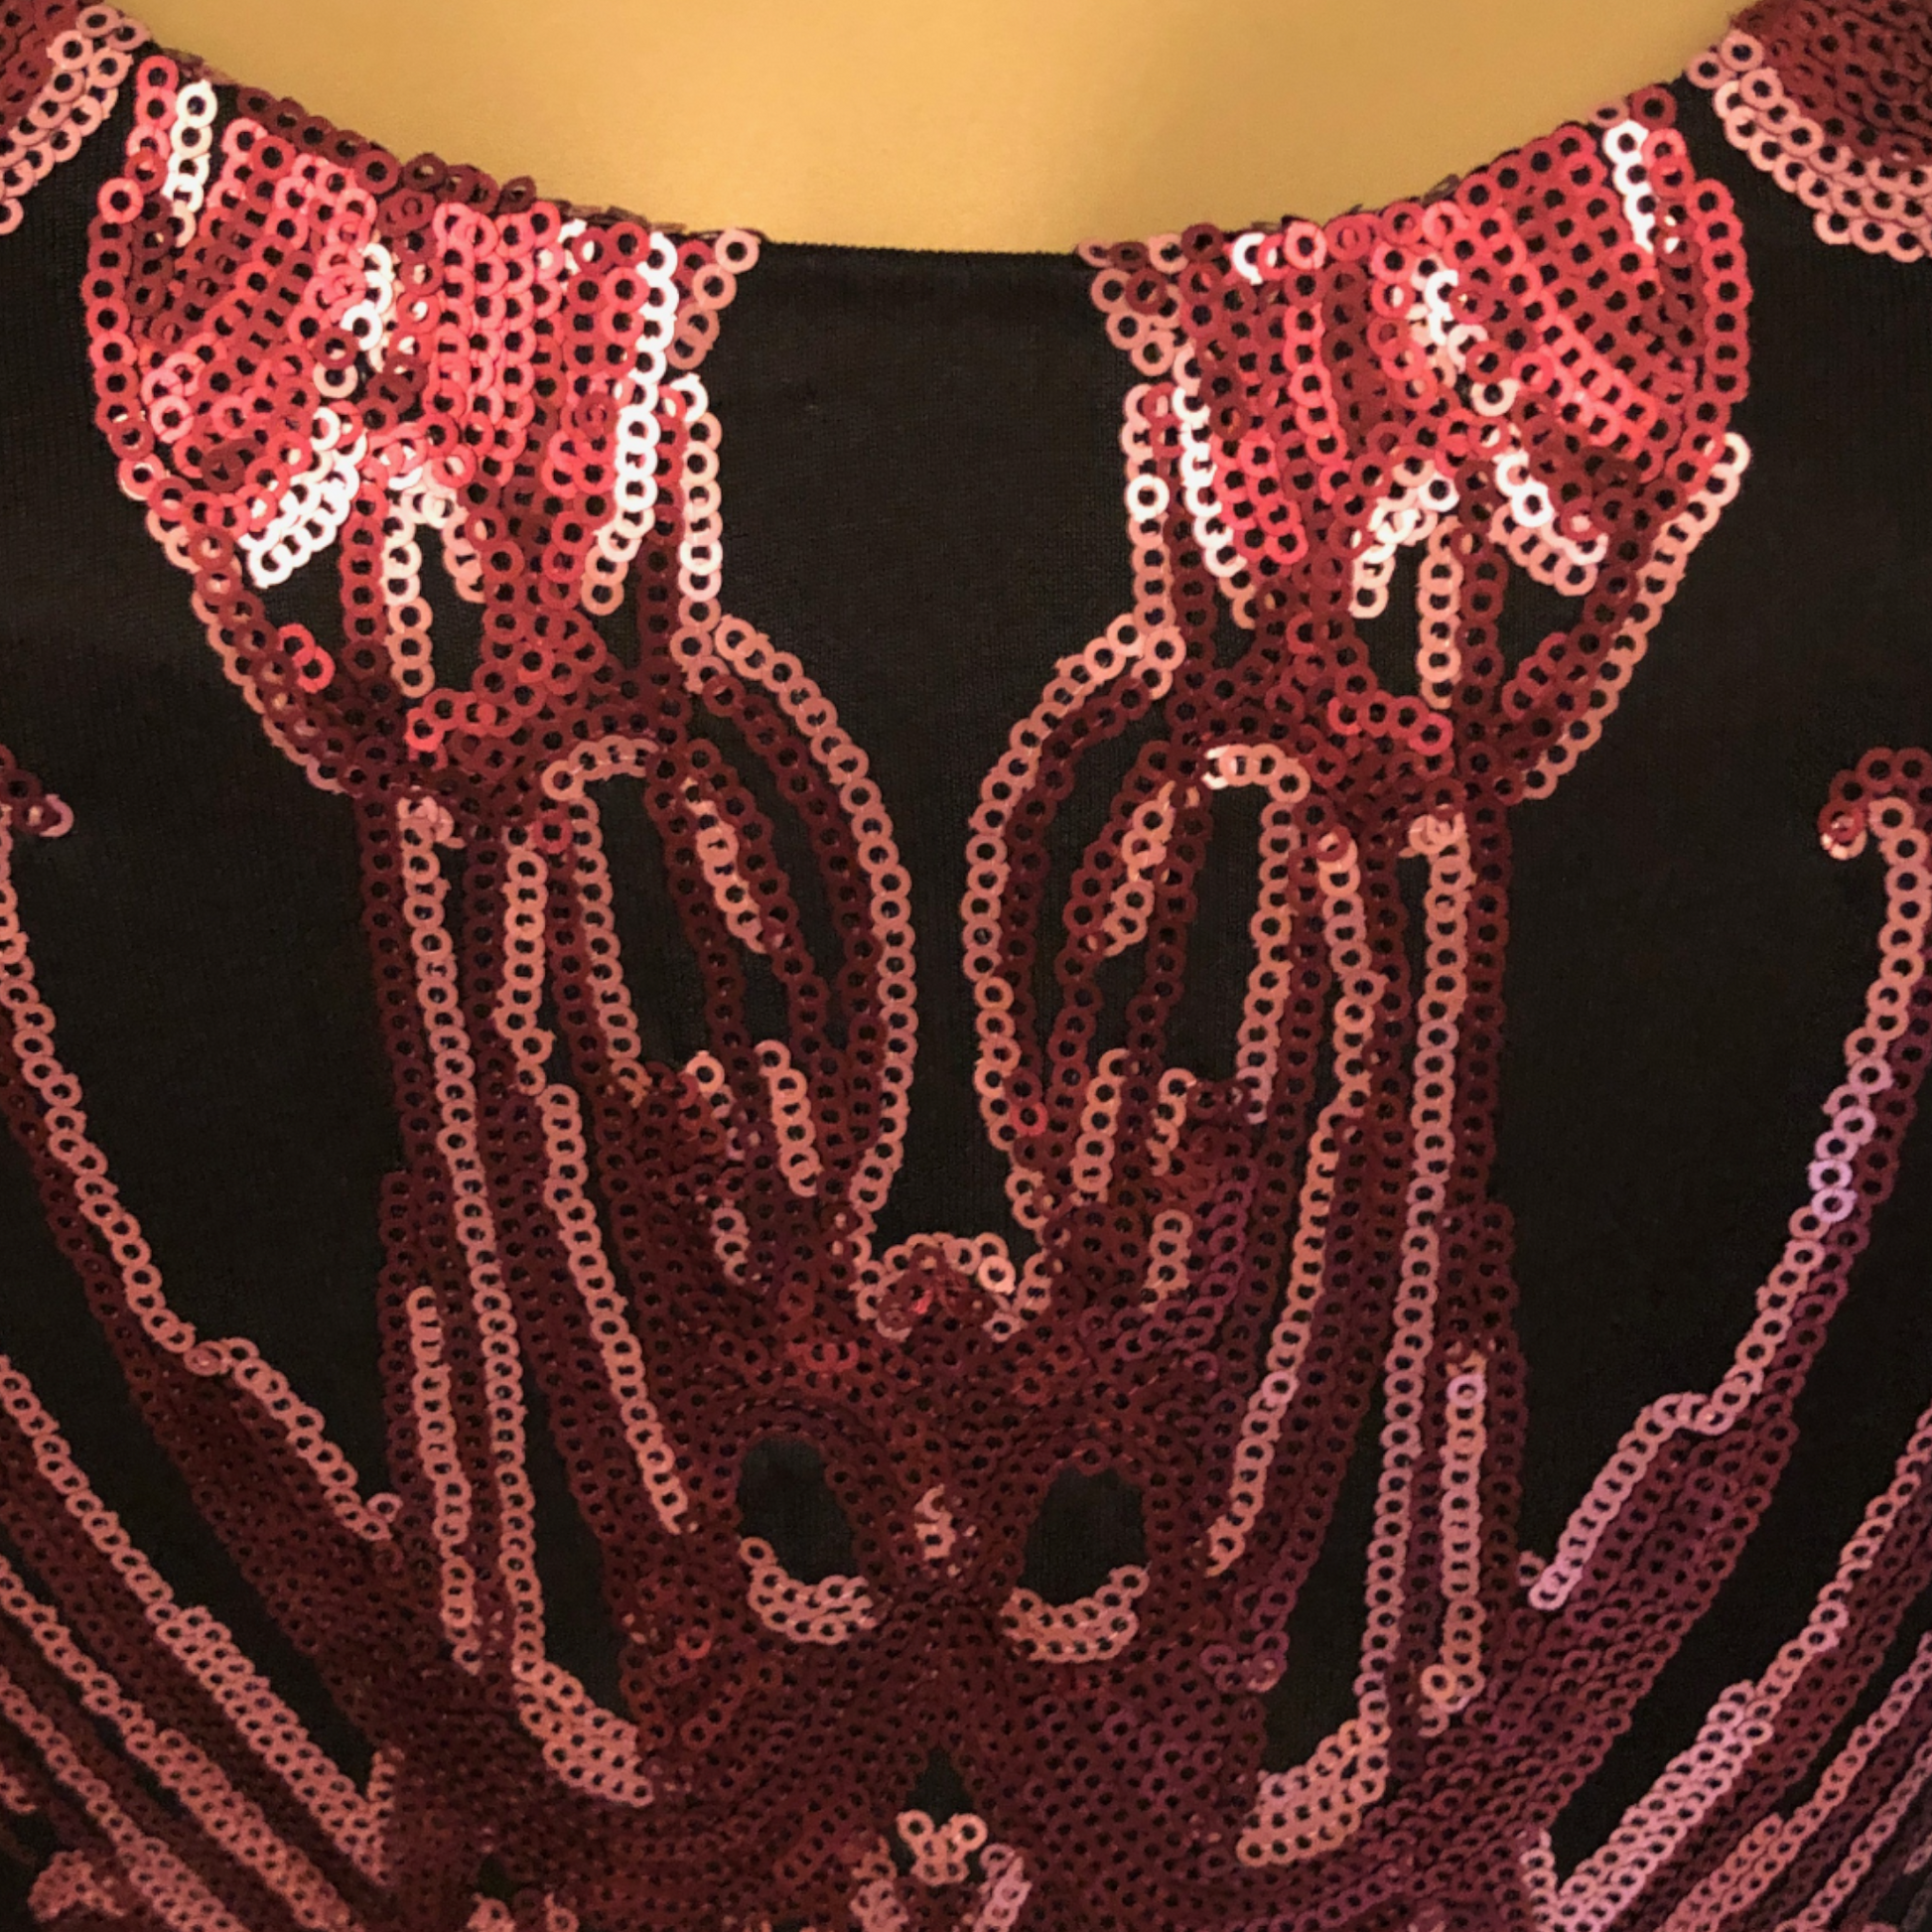 MIchaela Louisa Black & Red Sequin Silhouette Dress UK 16 US 12 EU 44 Timeless Fashions